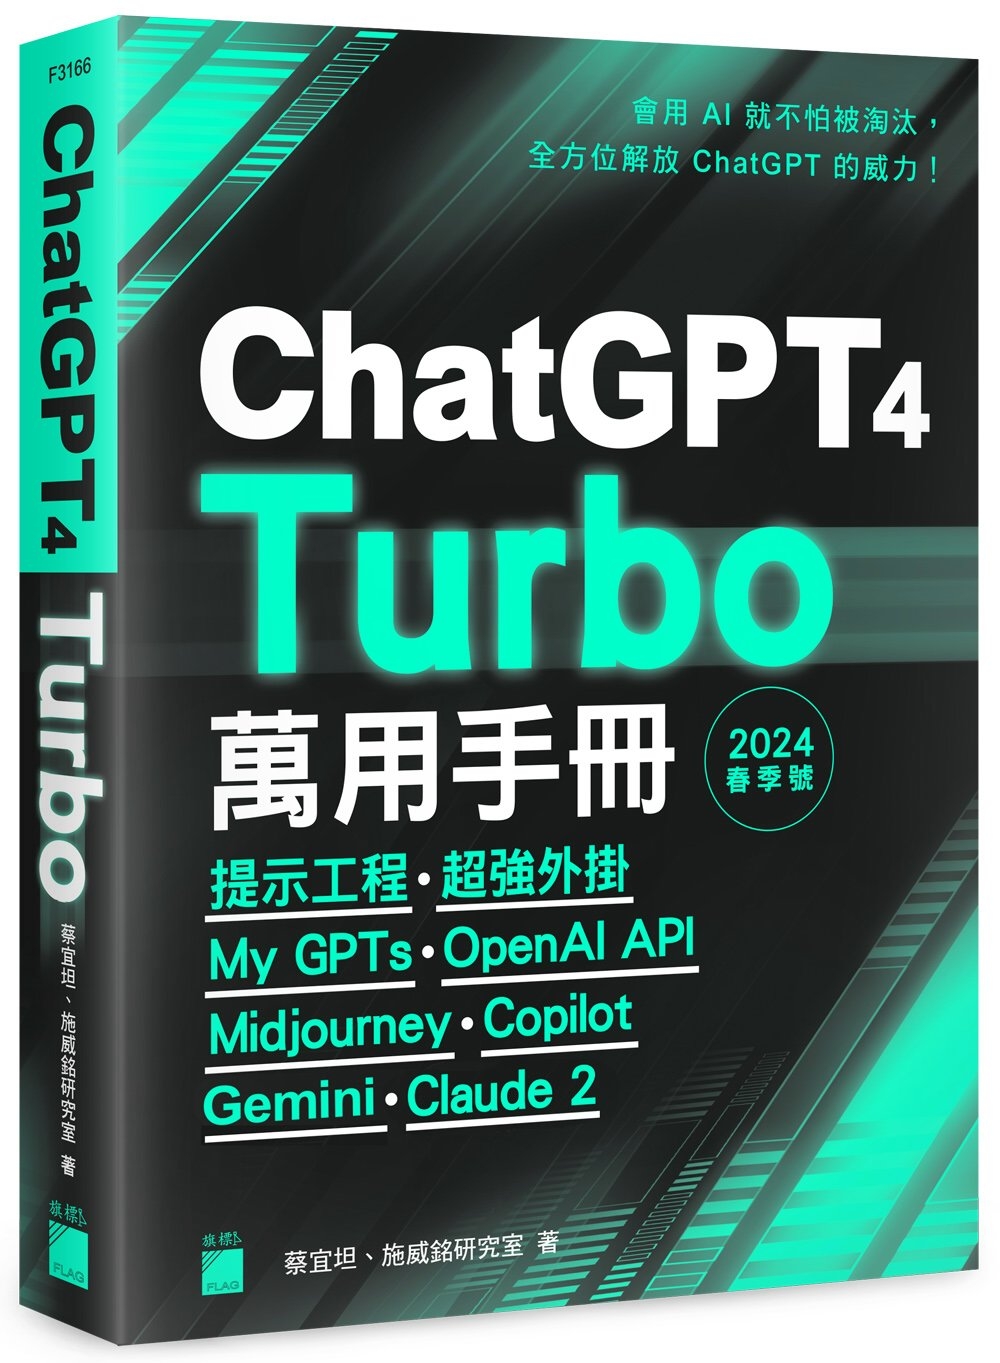 ChatGPT 4 Turbo 萬用手冊 2024 春季號：...